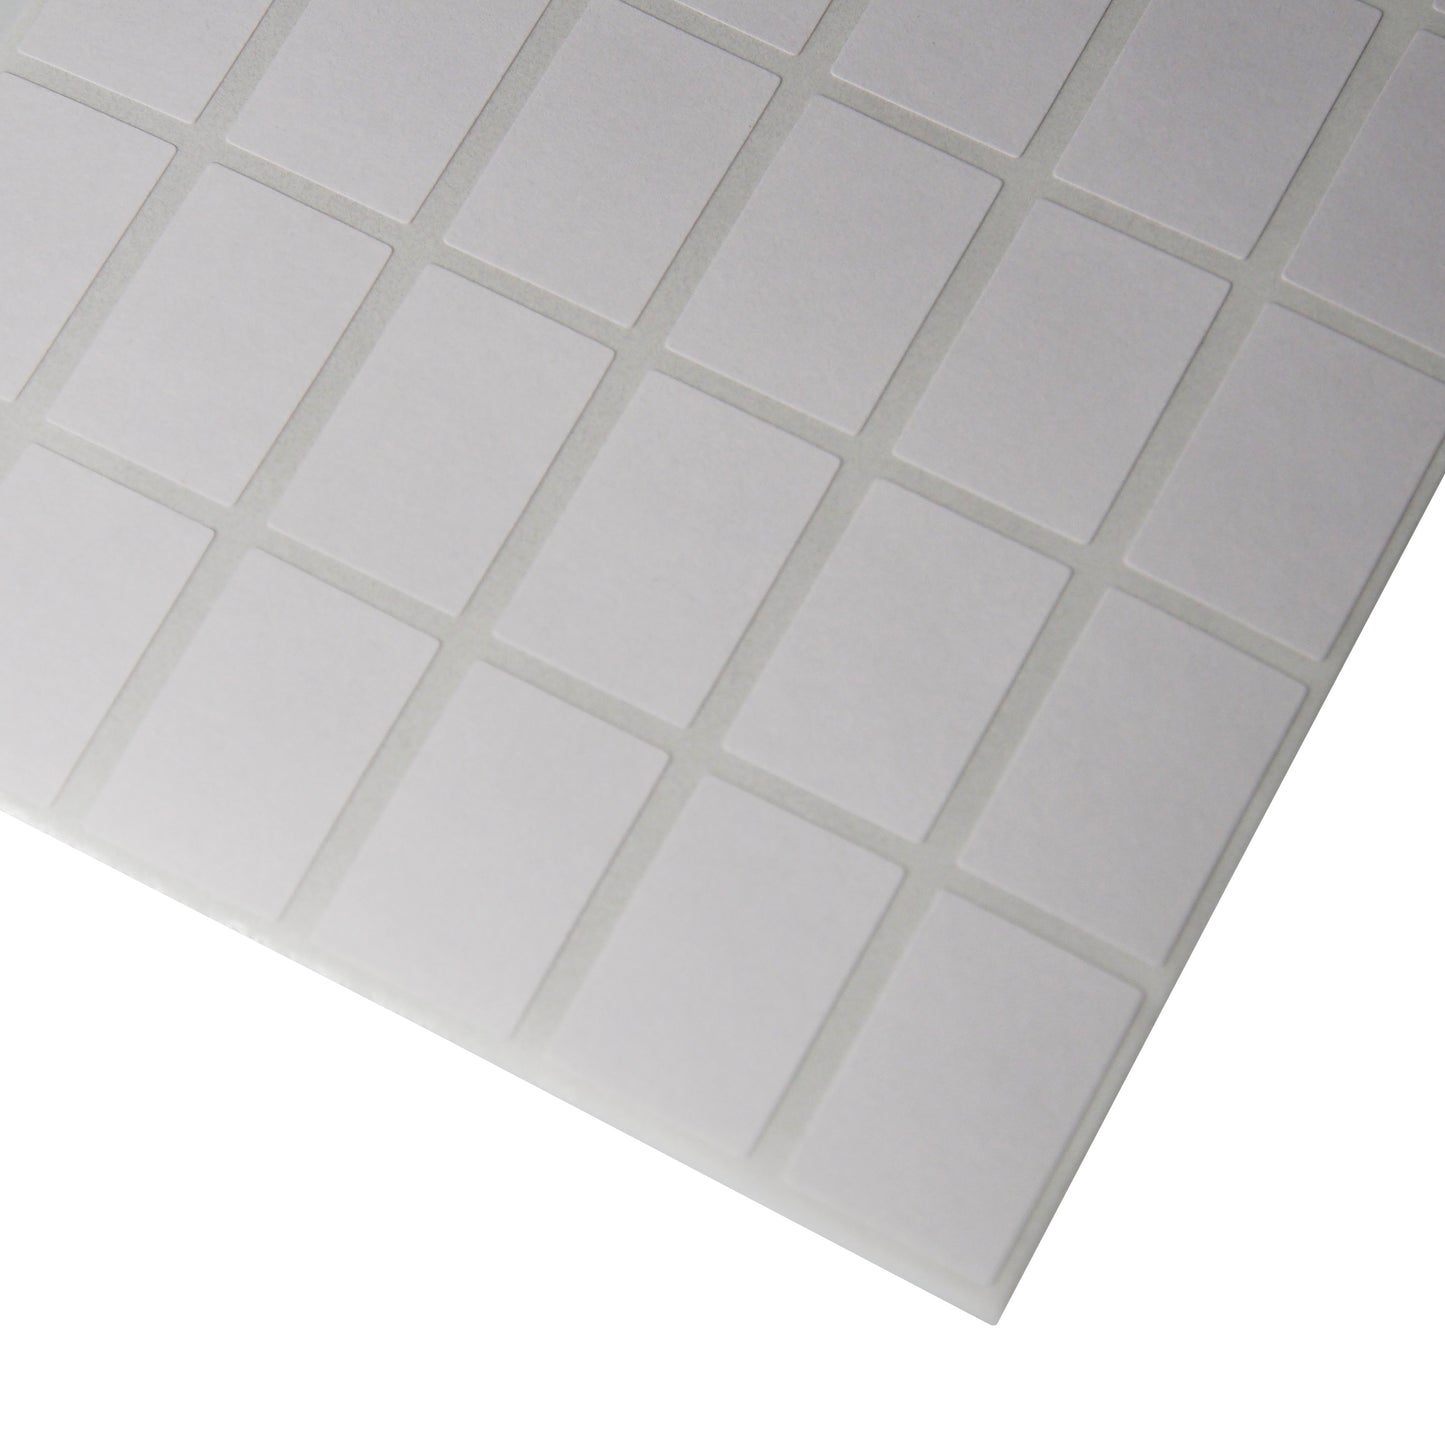 Corner of the sheet of Rectangular Self Adhesive Plain Label - 1008 Labels (1/2" x 3/4")